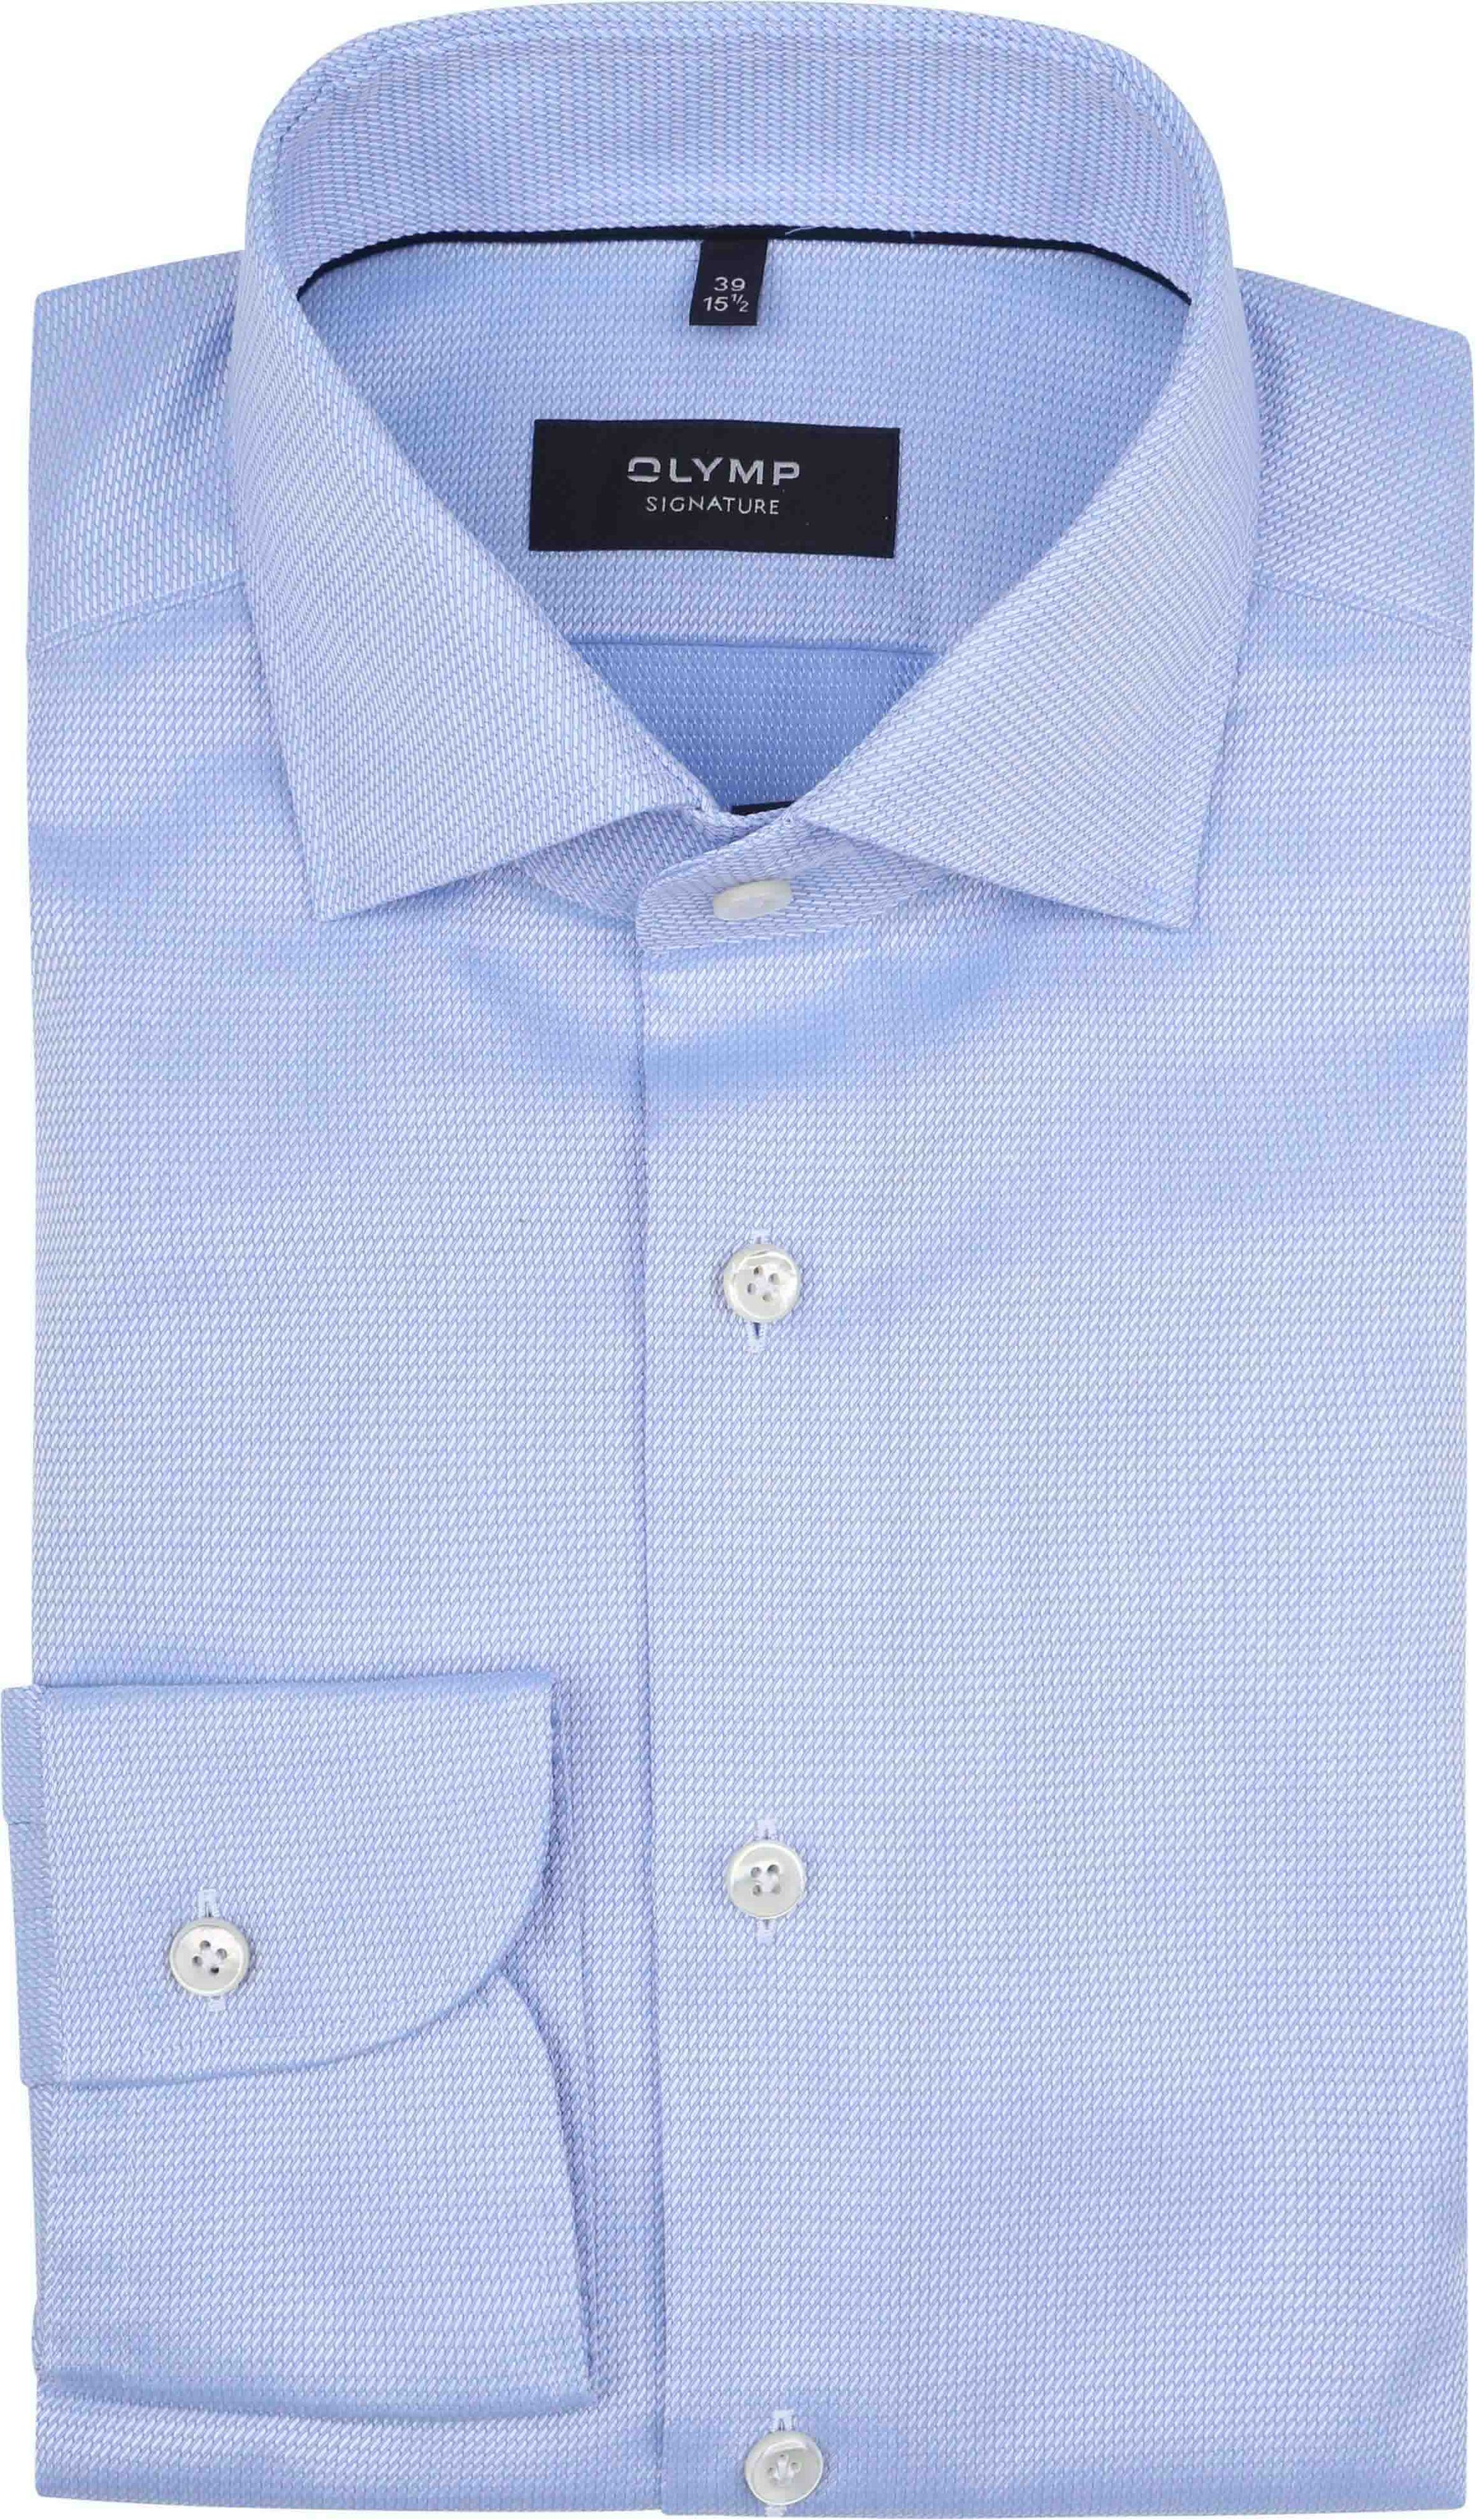 Olymp Signature Shirt Savio Light Light blue Blue size 46 product